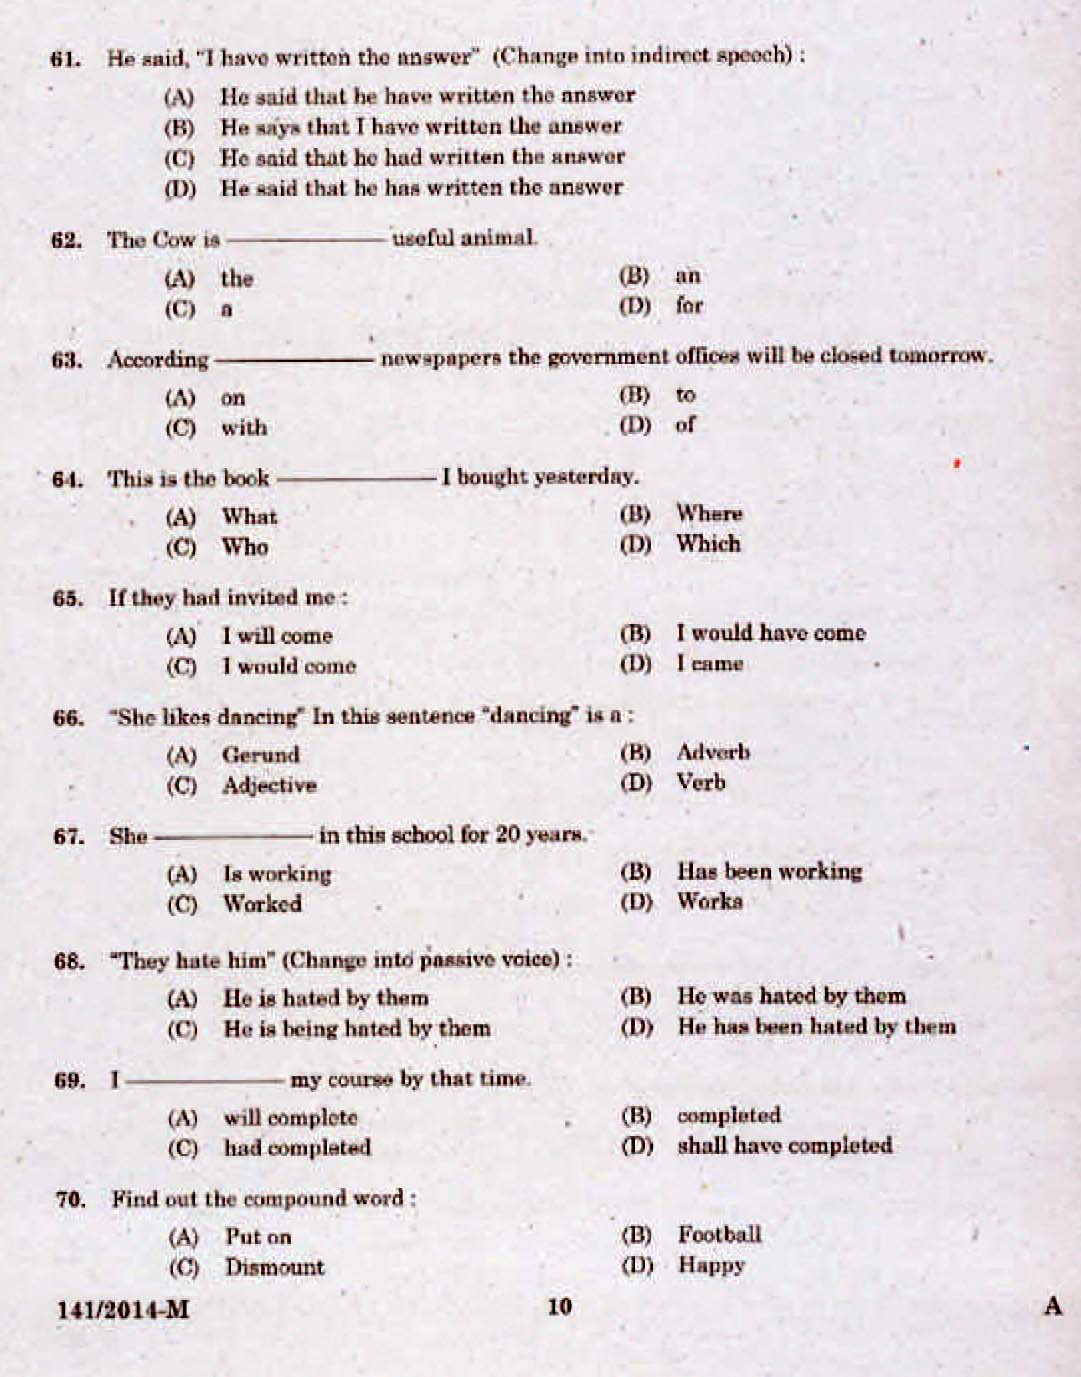 Kerala PSC Assistant Compiler Exam 2014 Question Paper Code 1412014 M 8